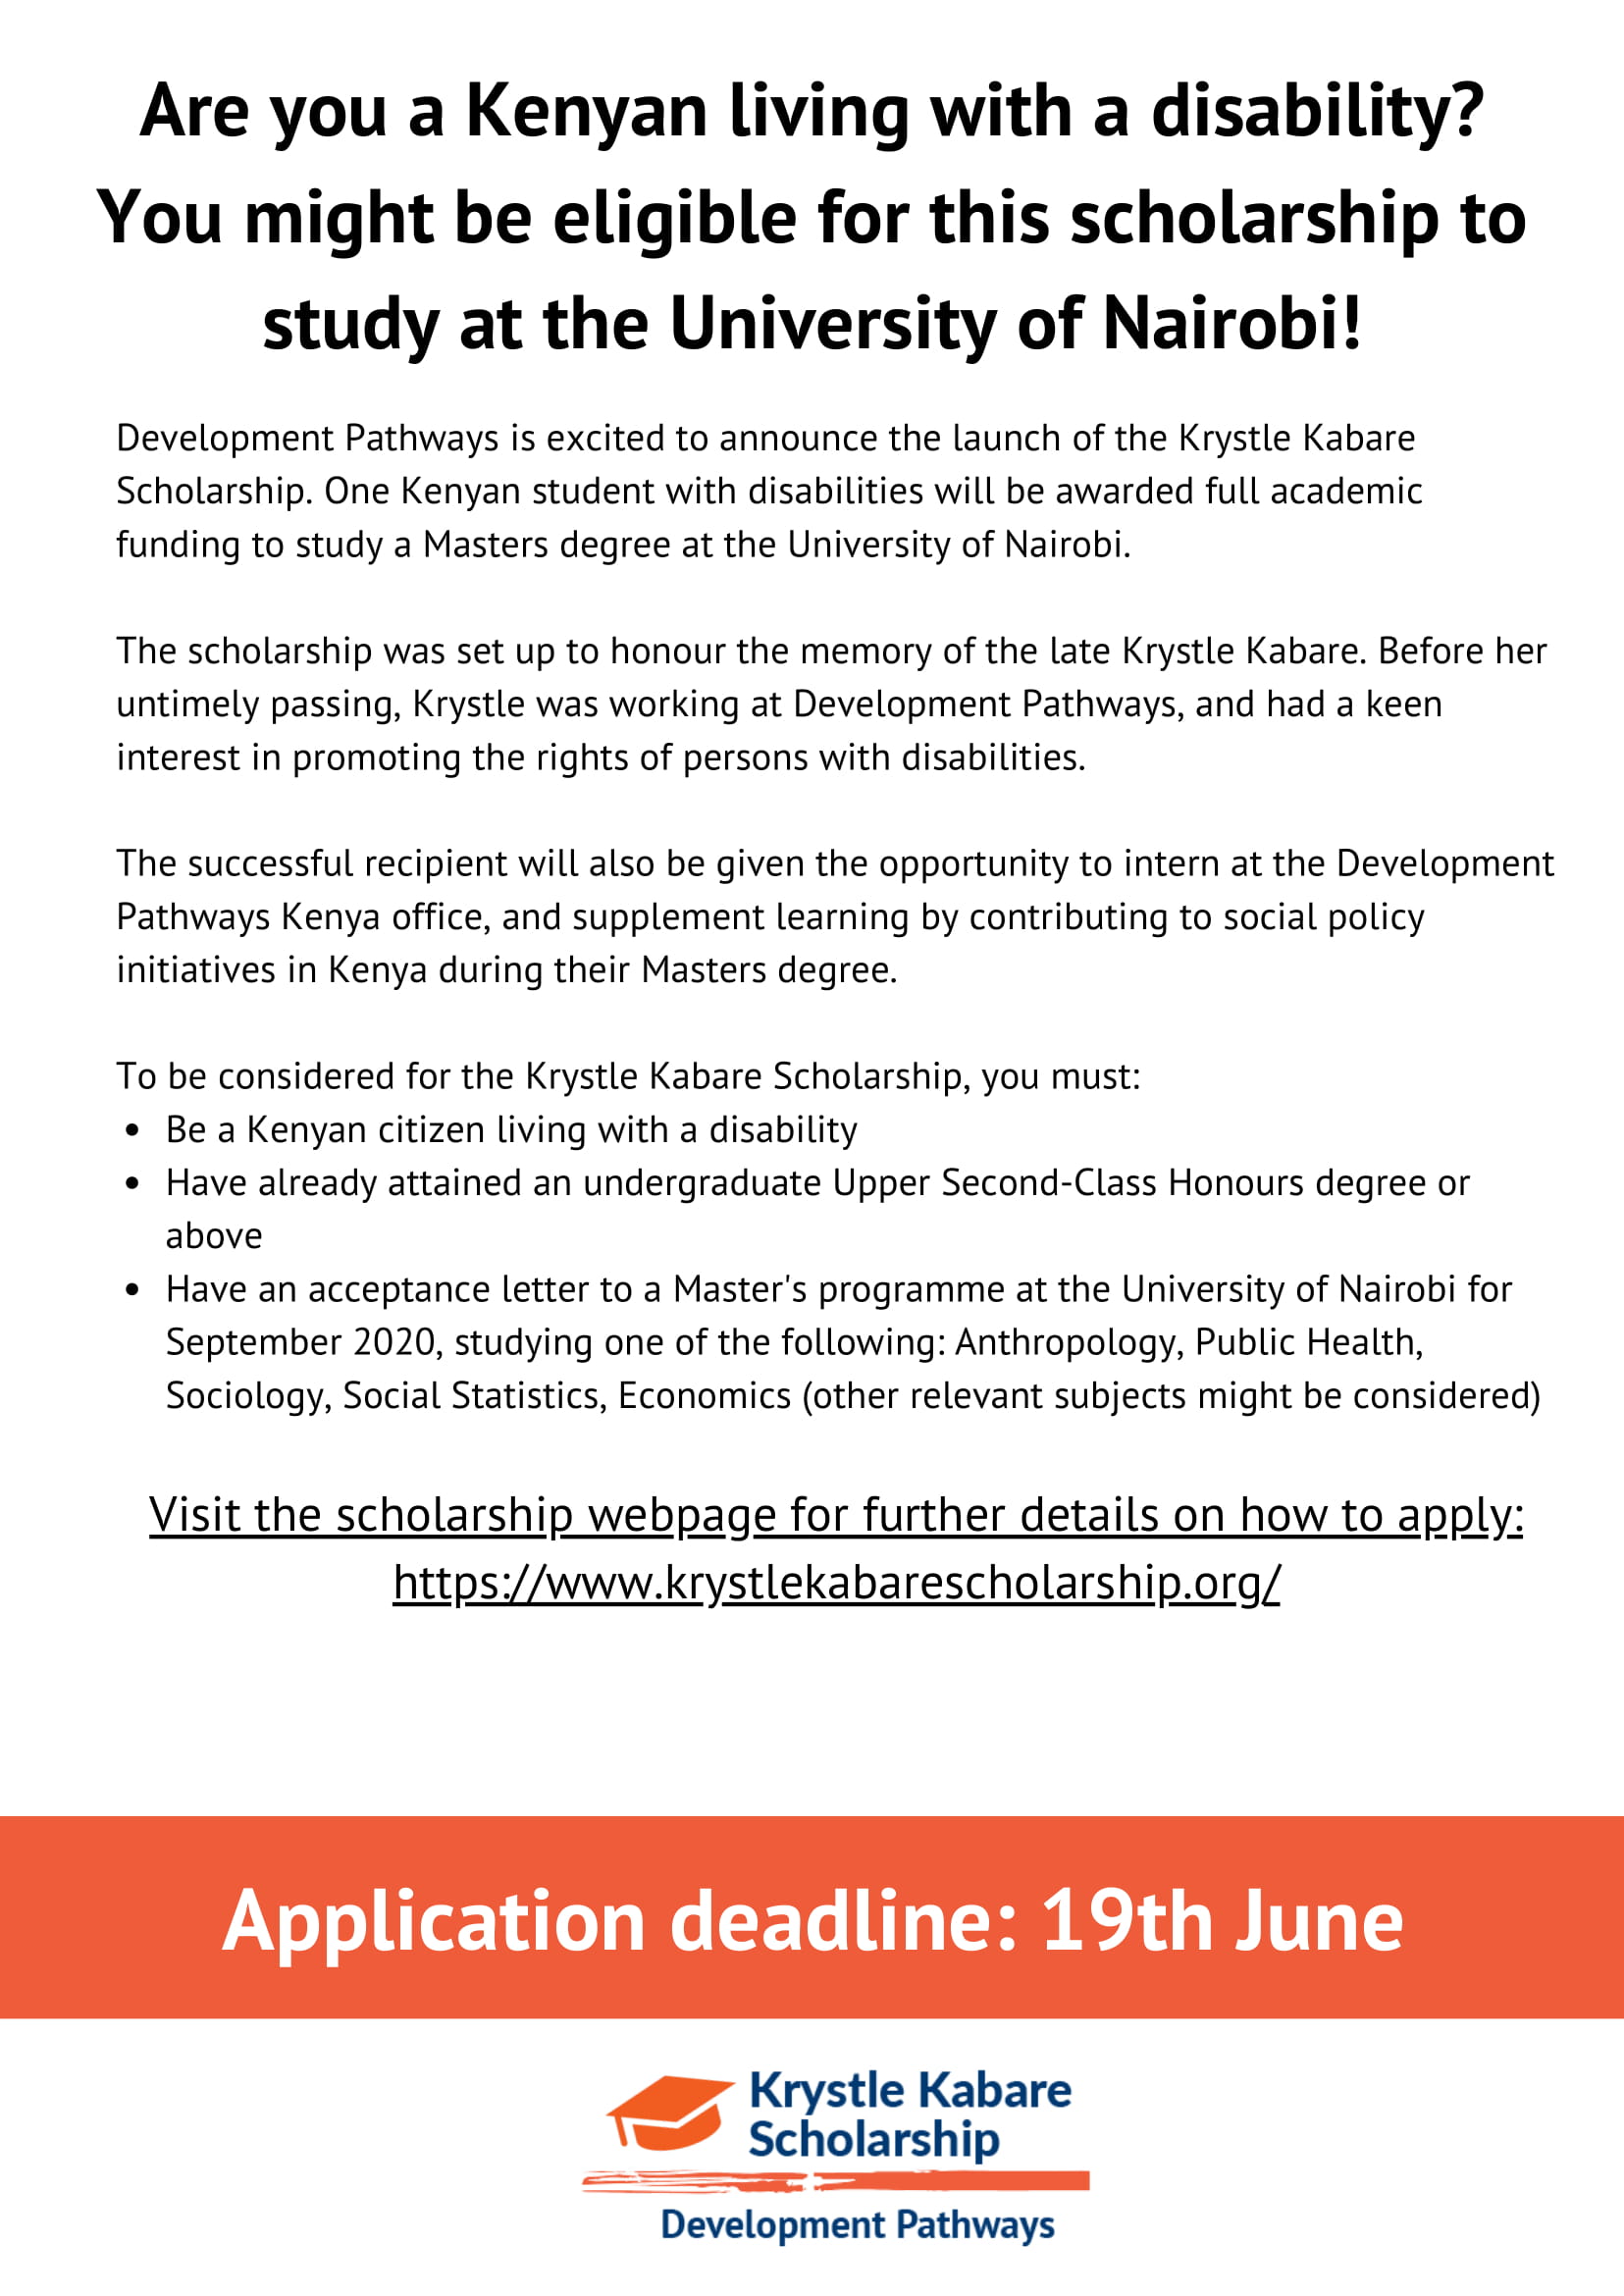 Development Pathways - Krystle Kabare Scholarship